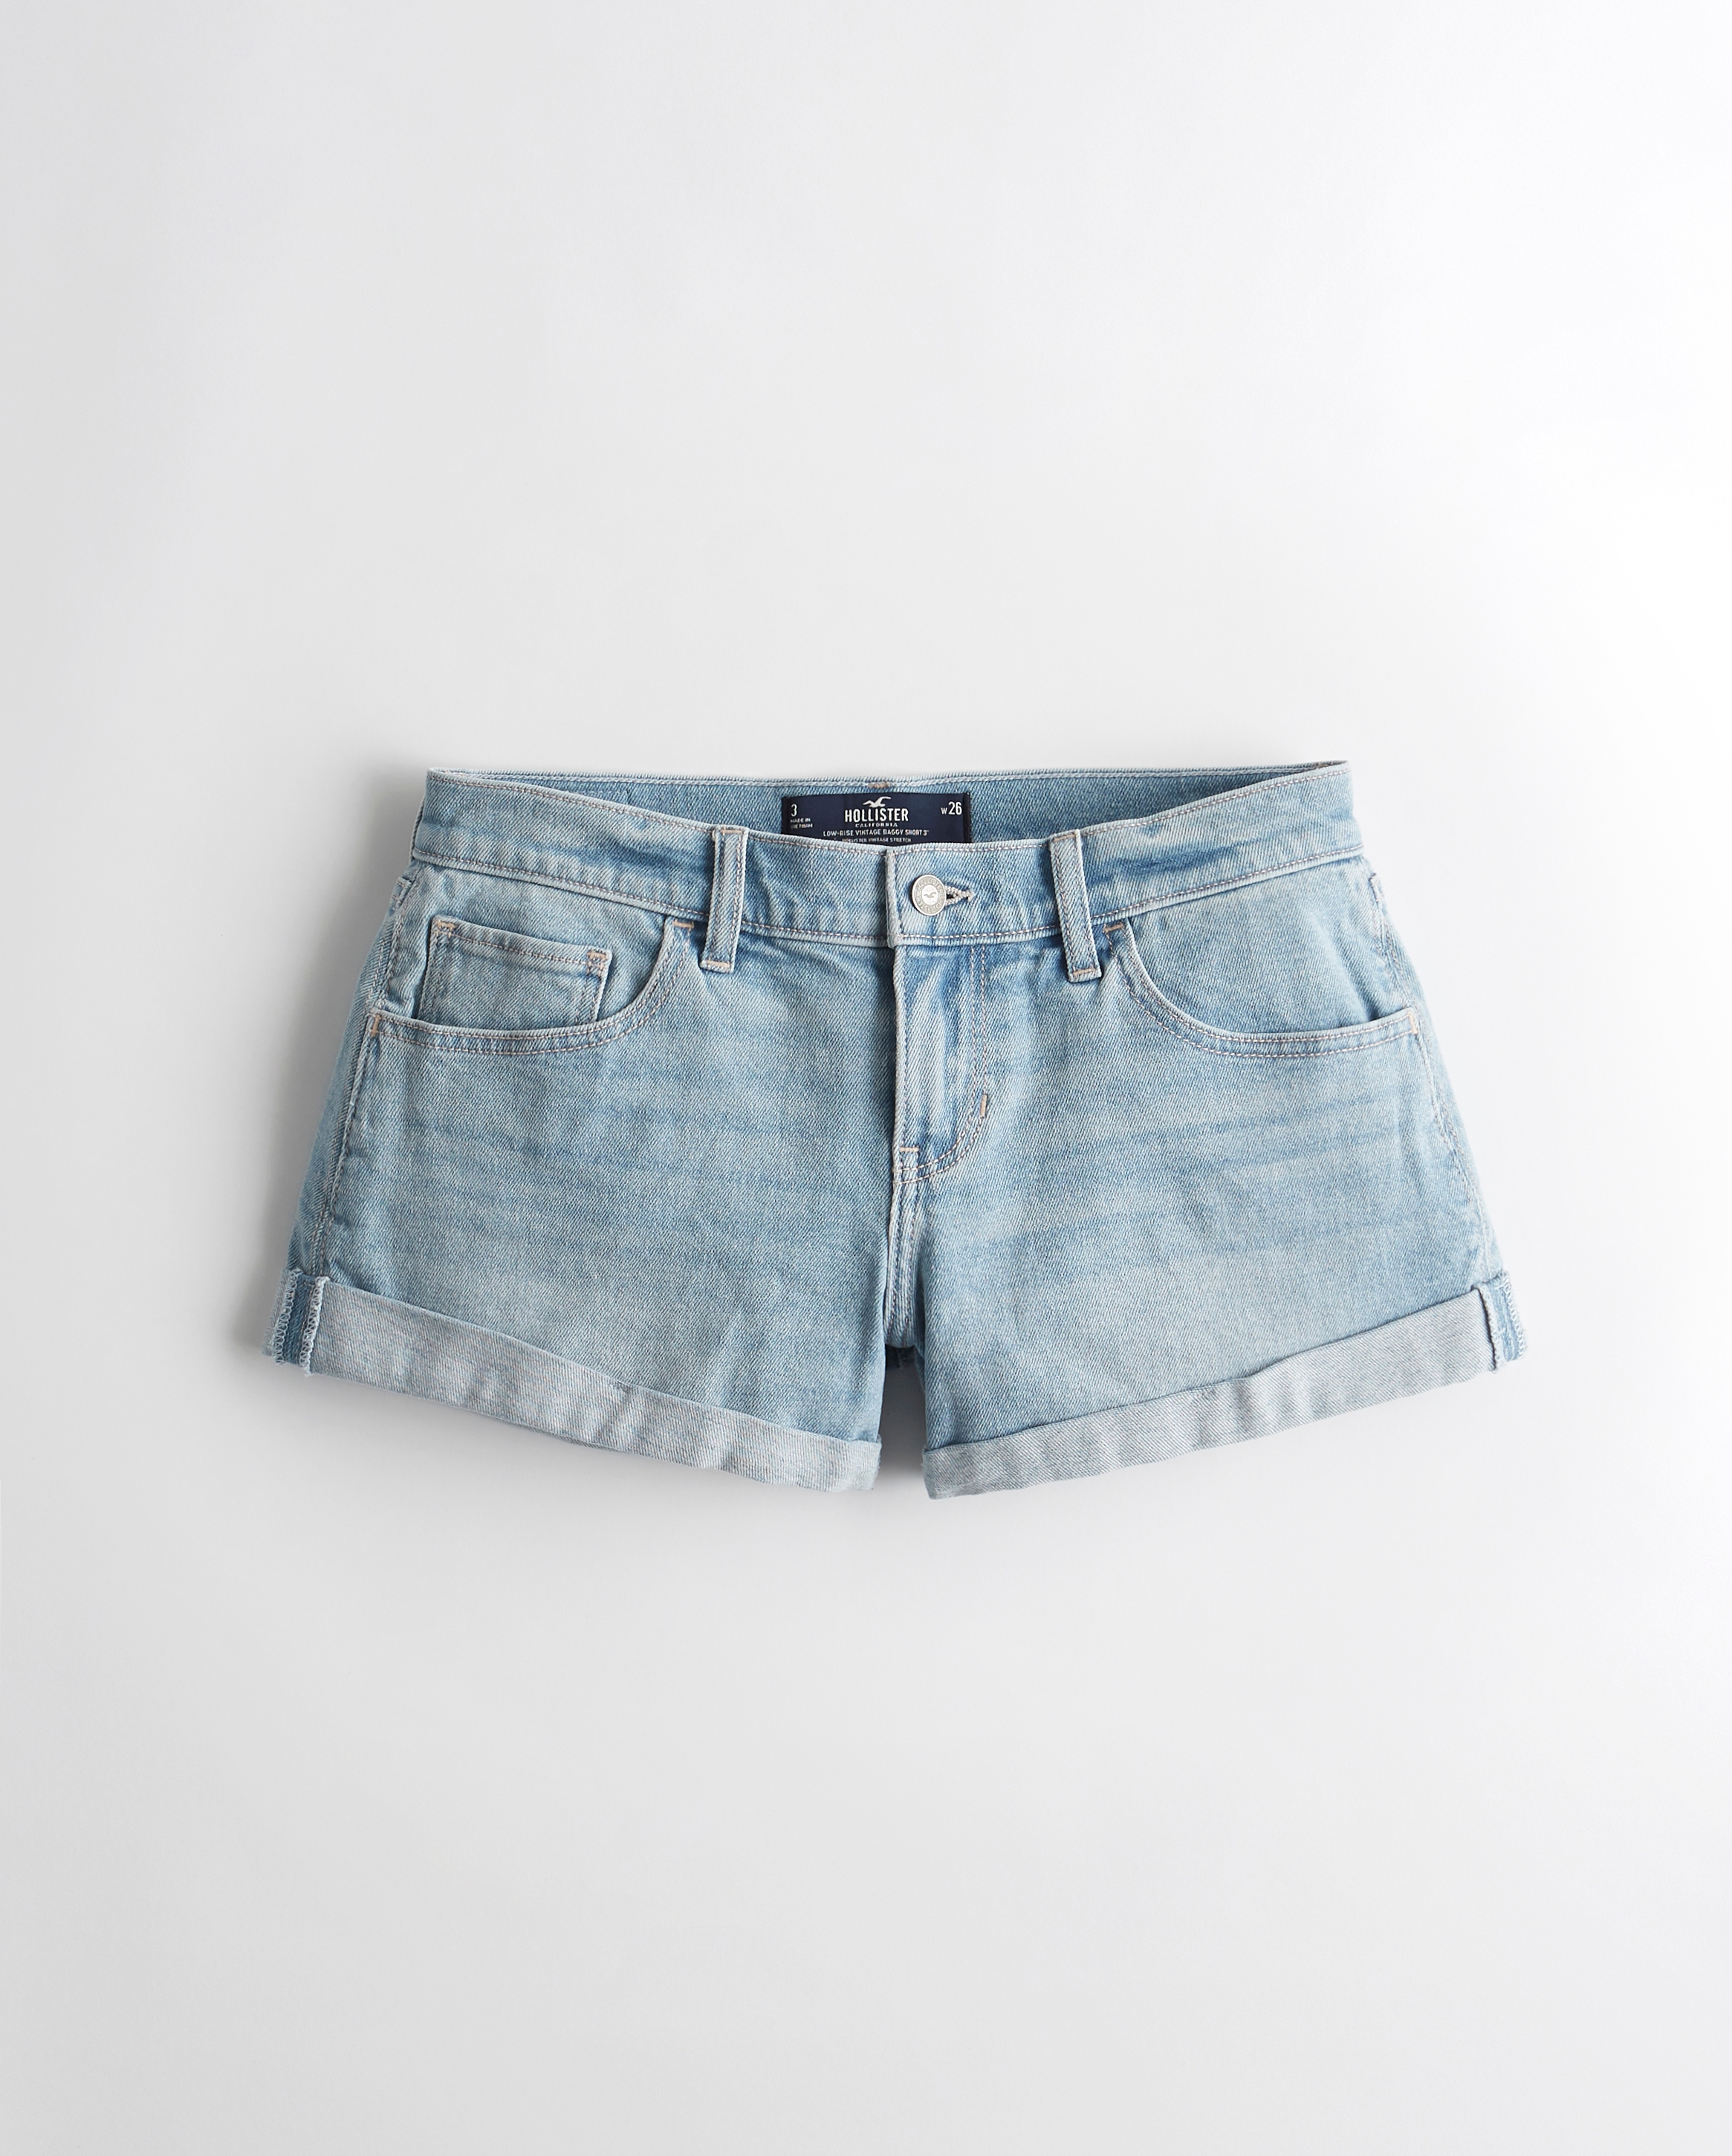 FLEXHOOD American Vintage Denim Shorts-